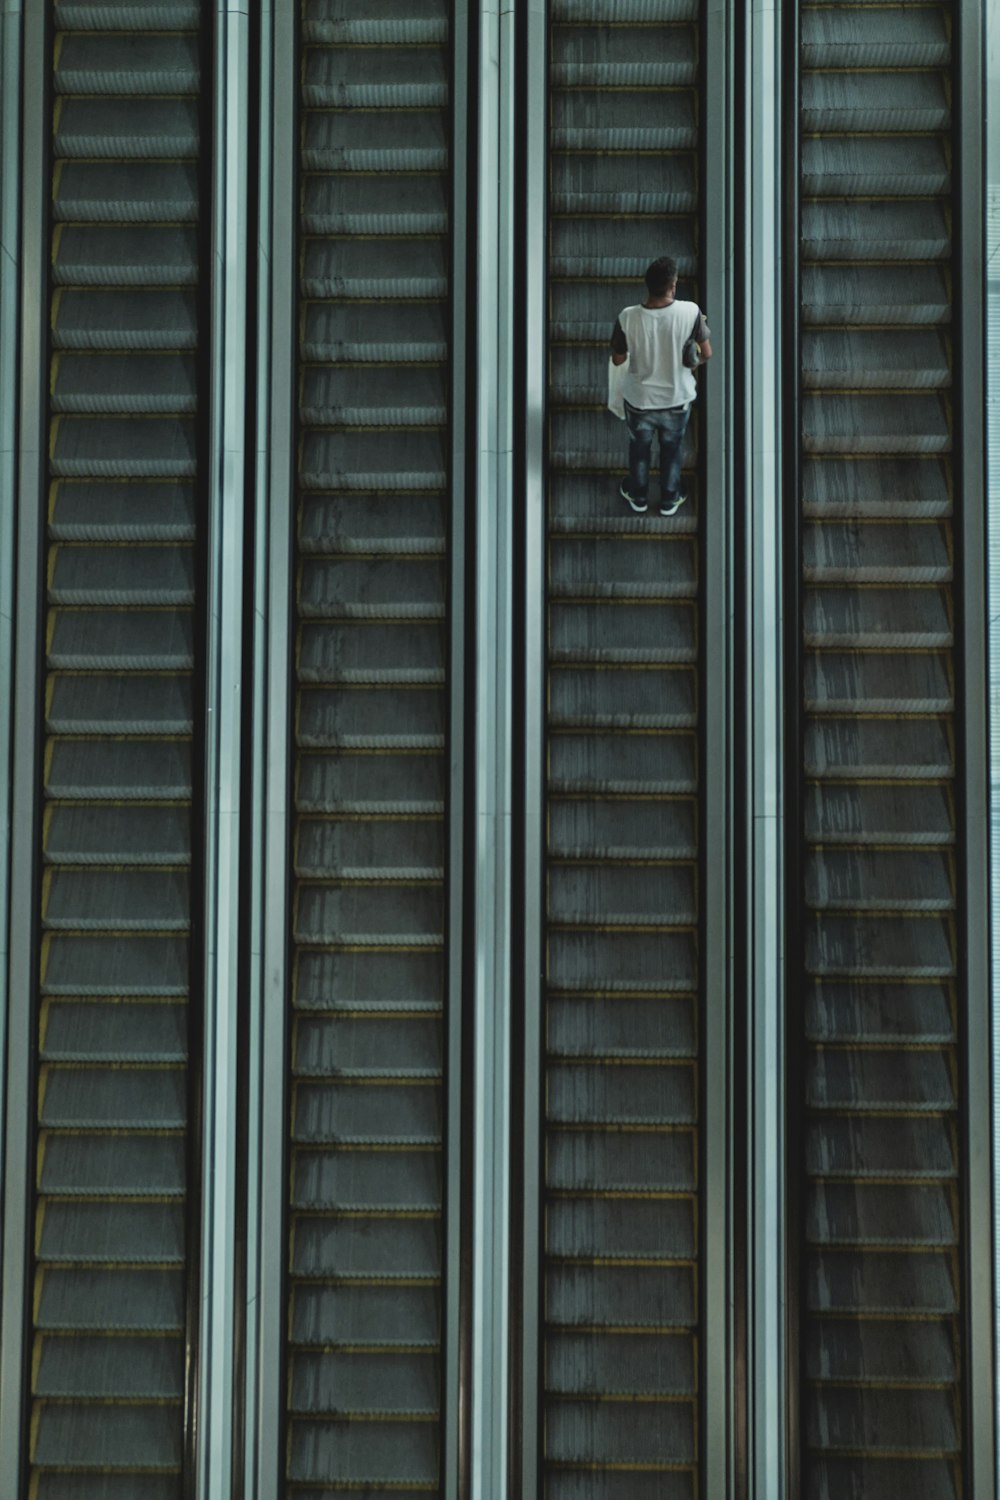 man riding on escalator